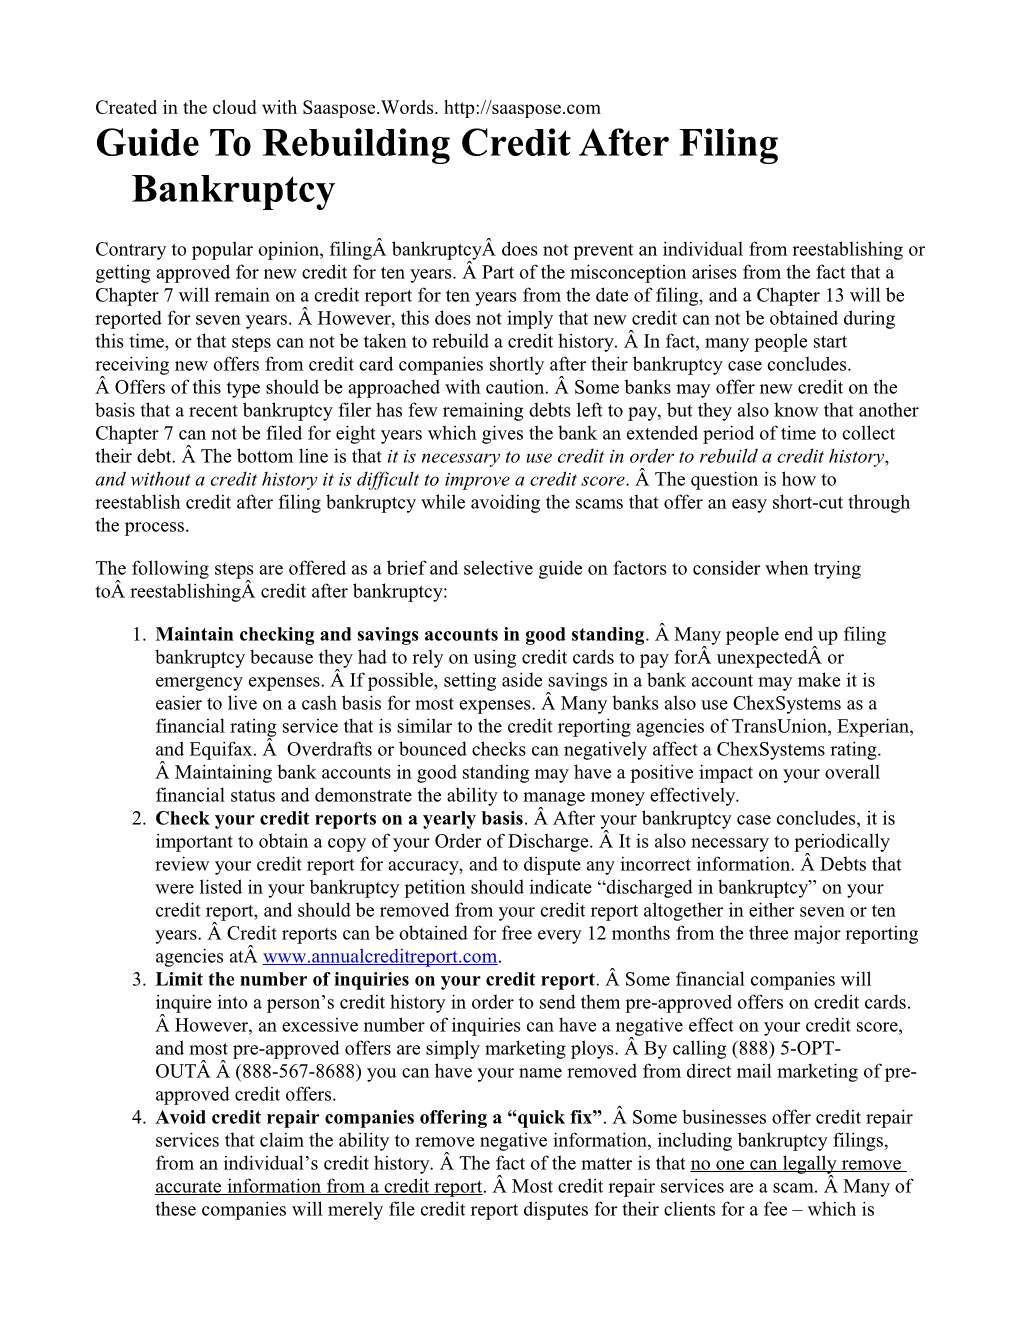 Guide to Rebuilding Credit After Filing Bankruptcy